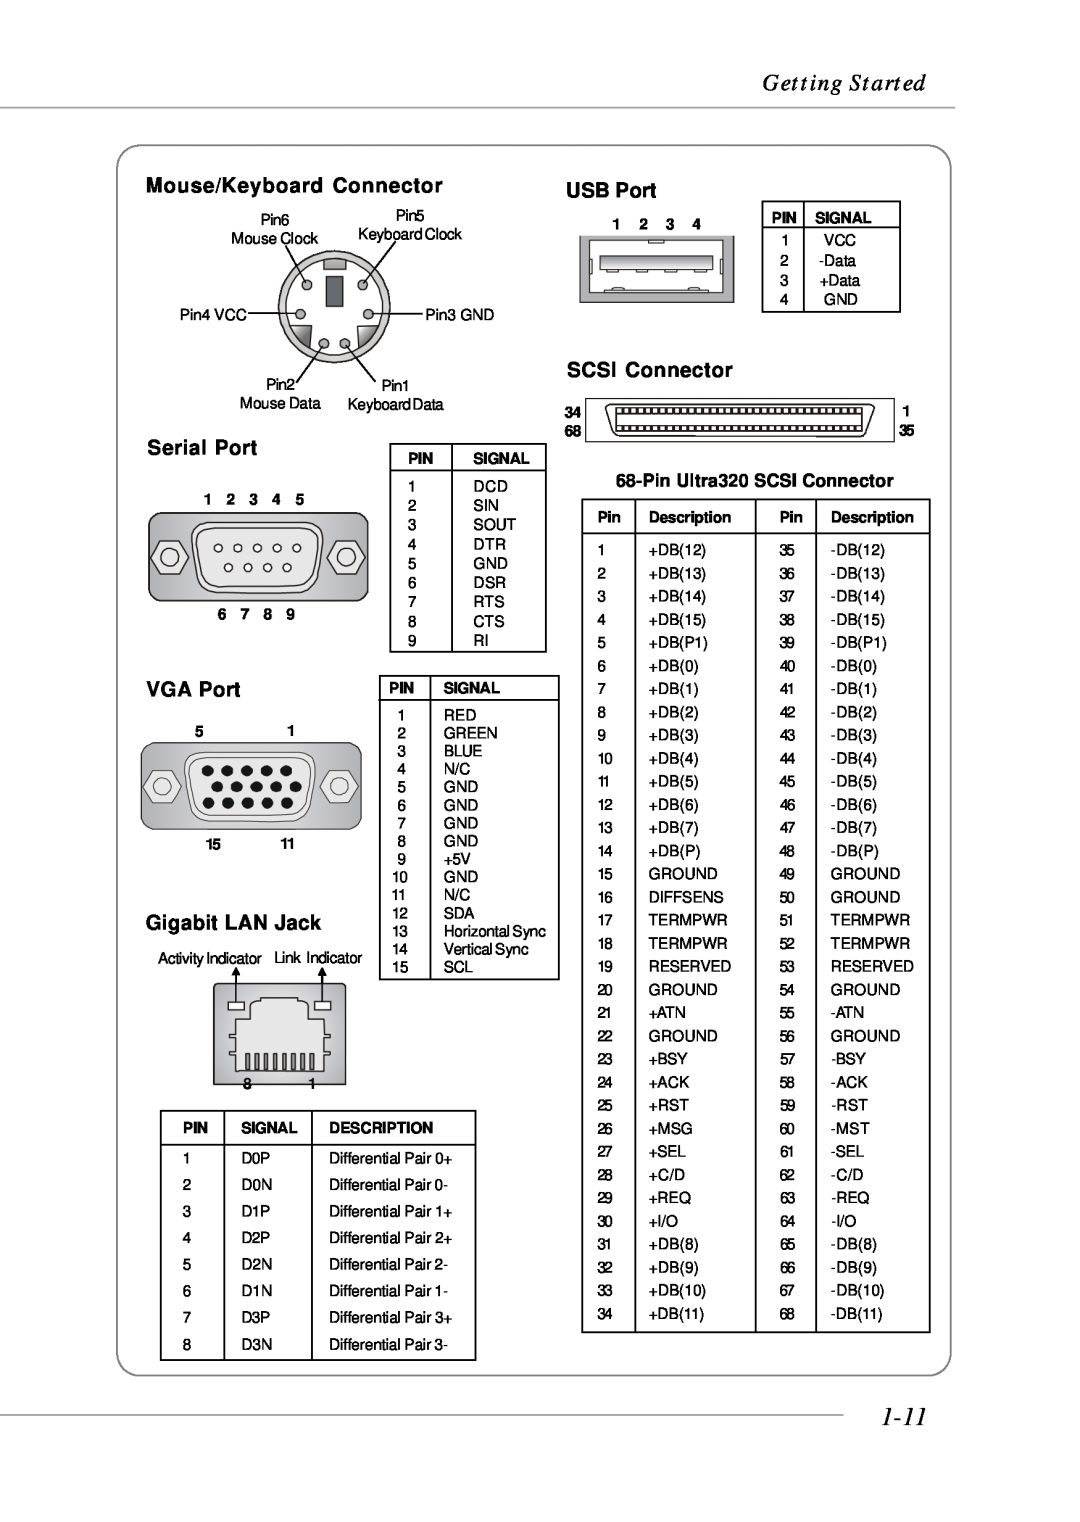 MSI MS-9246 1-11, Getting Started, Mouse/Keyboard Connector, Serial Port, VGA Port, Gigabit LAN Jack, USB Port, Signal 